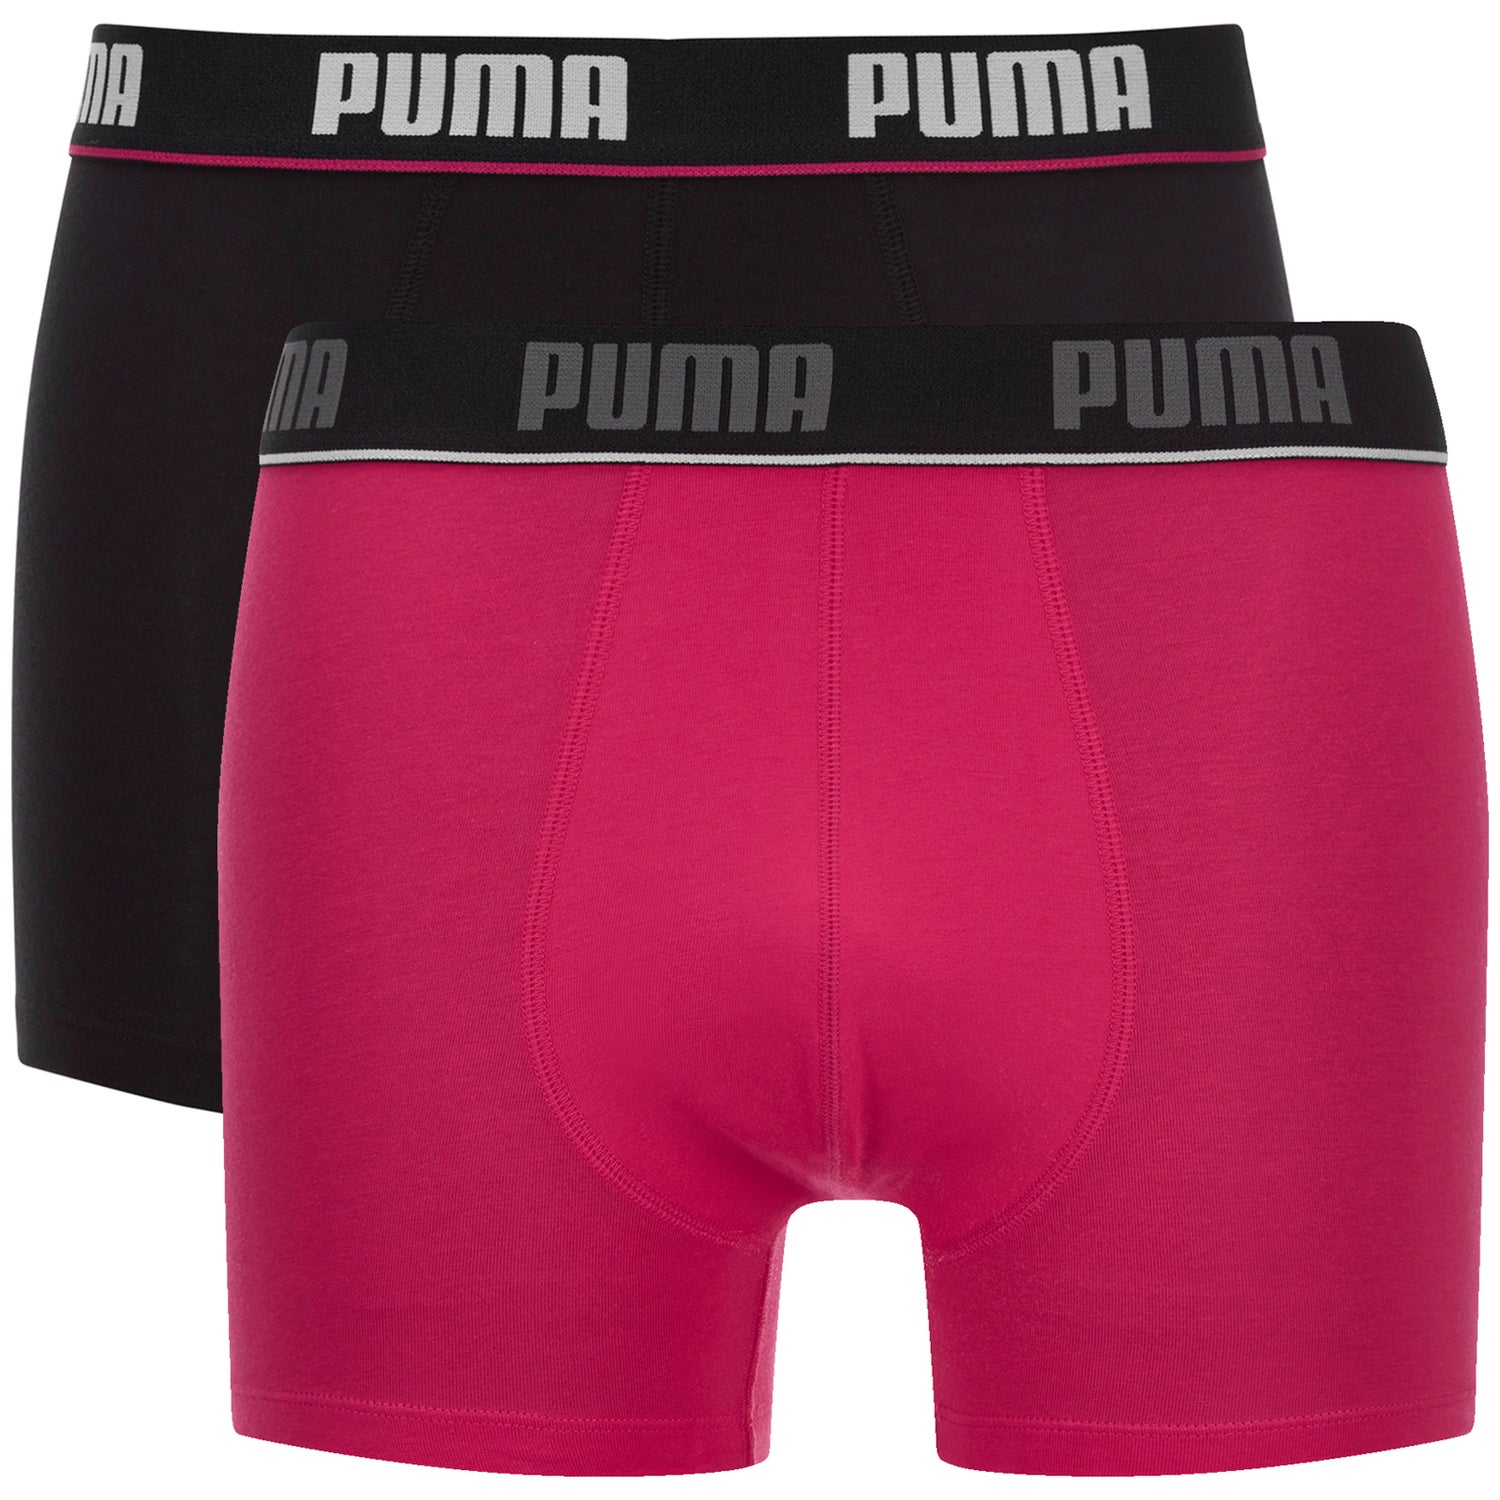 Kll Buffalo Plaid Red Black Men'S Cotton Boxer Briefs Underwear-Xx-Large